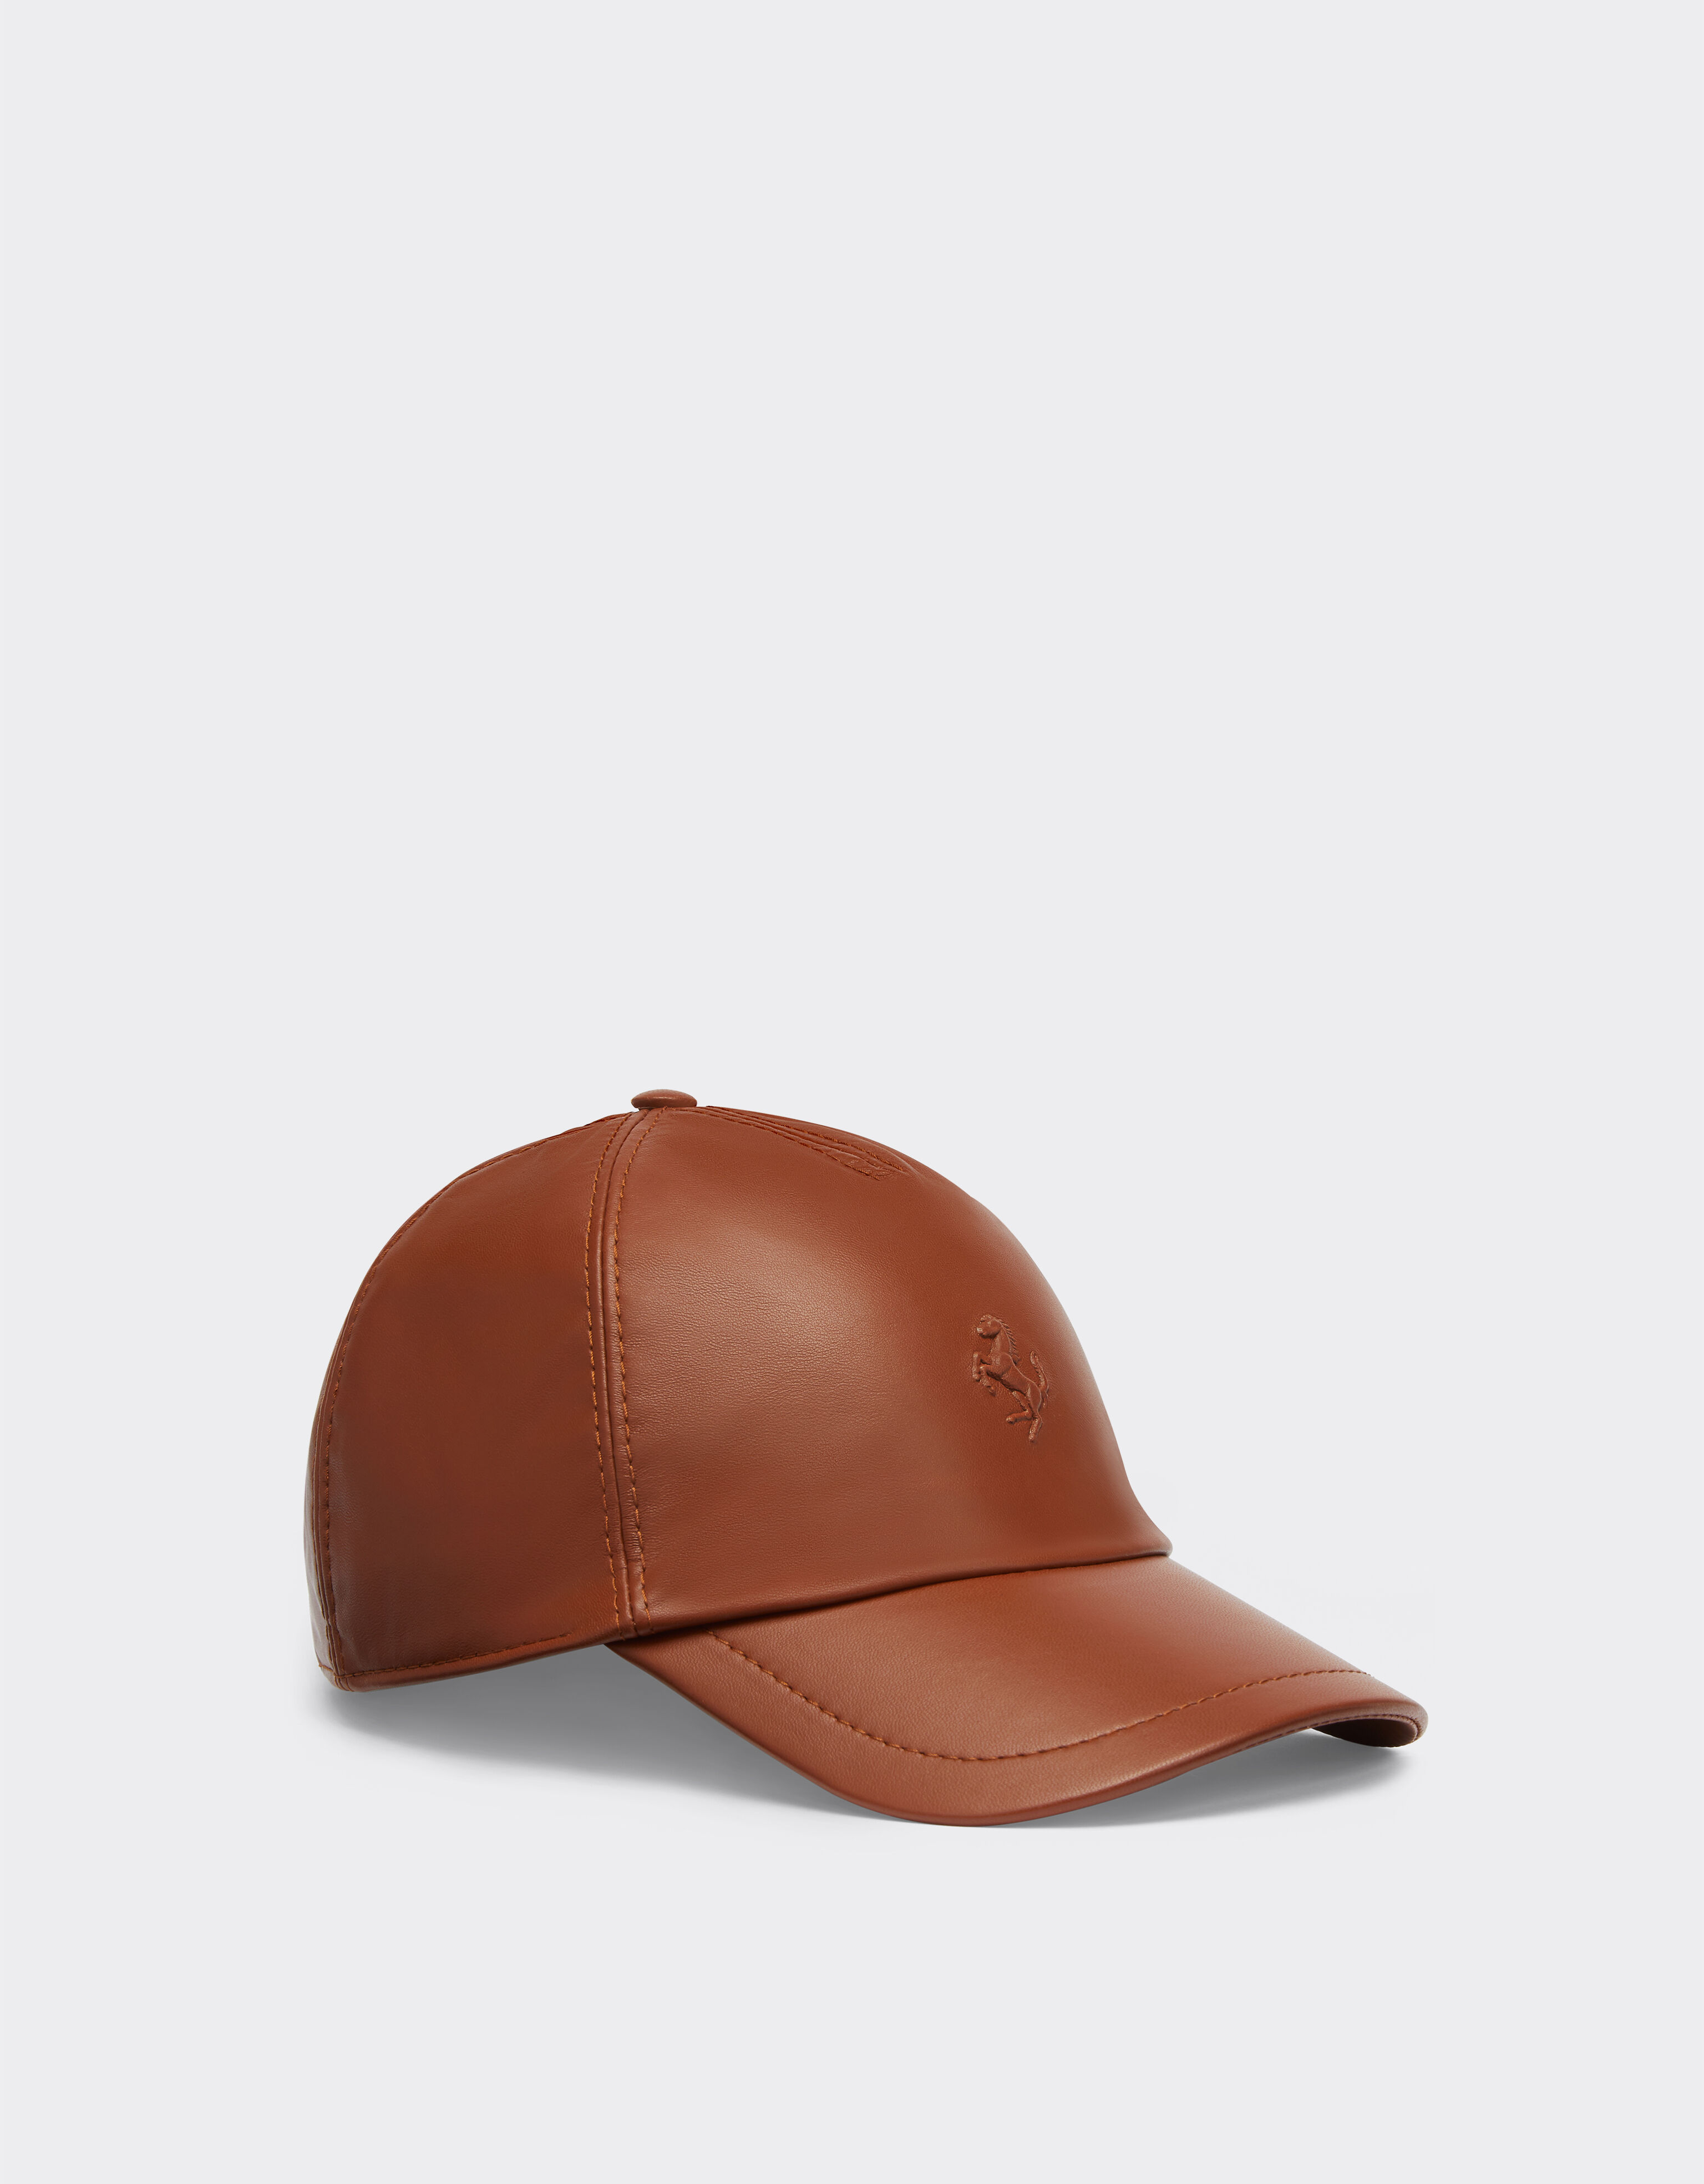 Ferrari Baseball cap with Prancing Horse logo Hide 20264f